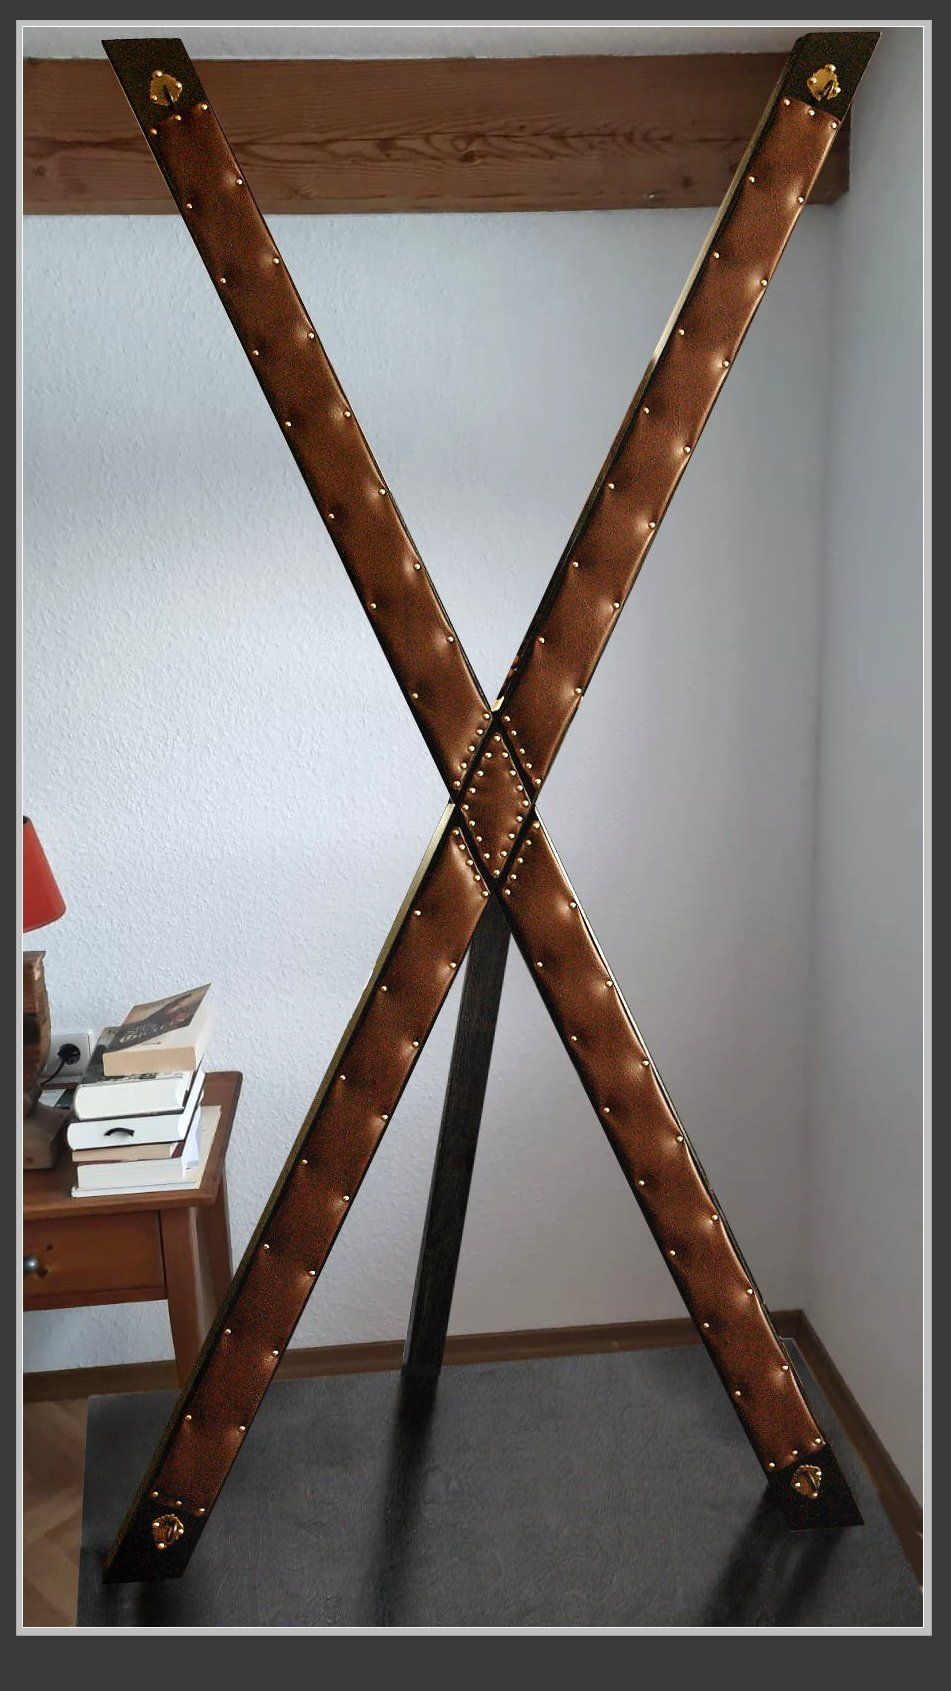 BDSM-Kreuz Standkreuz Andreaskreuz mit Bodenplatte